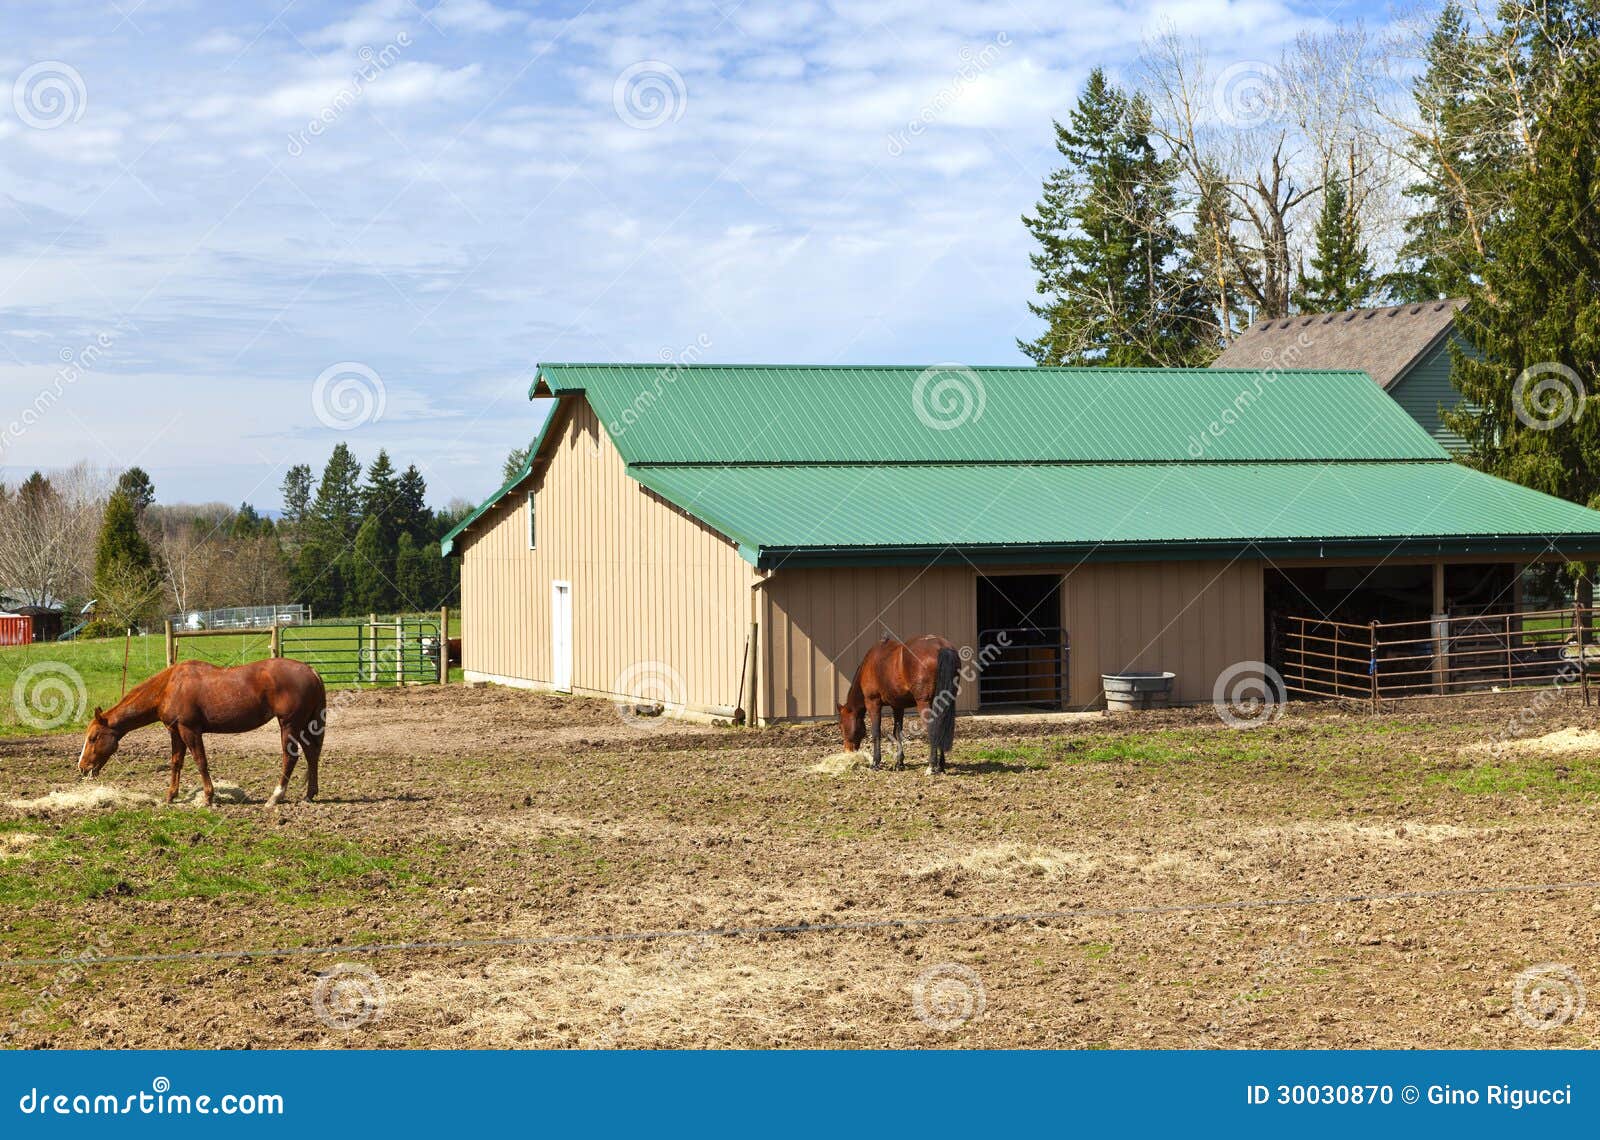 Stock Photo: Feeding horses and barn in rural Oregon.